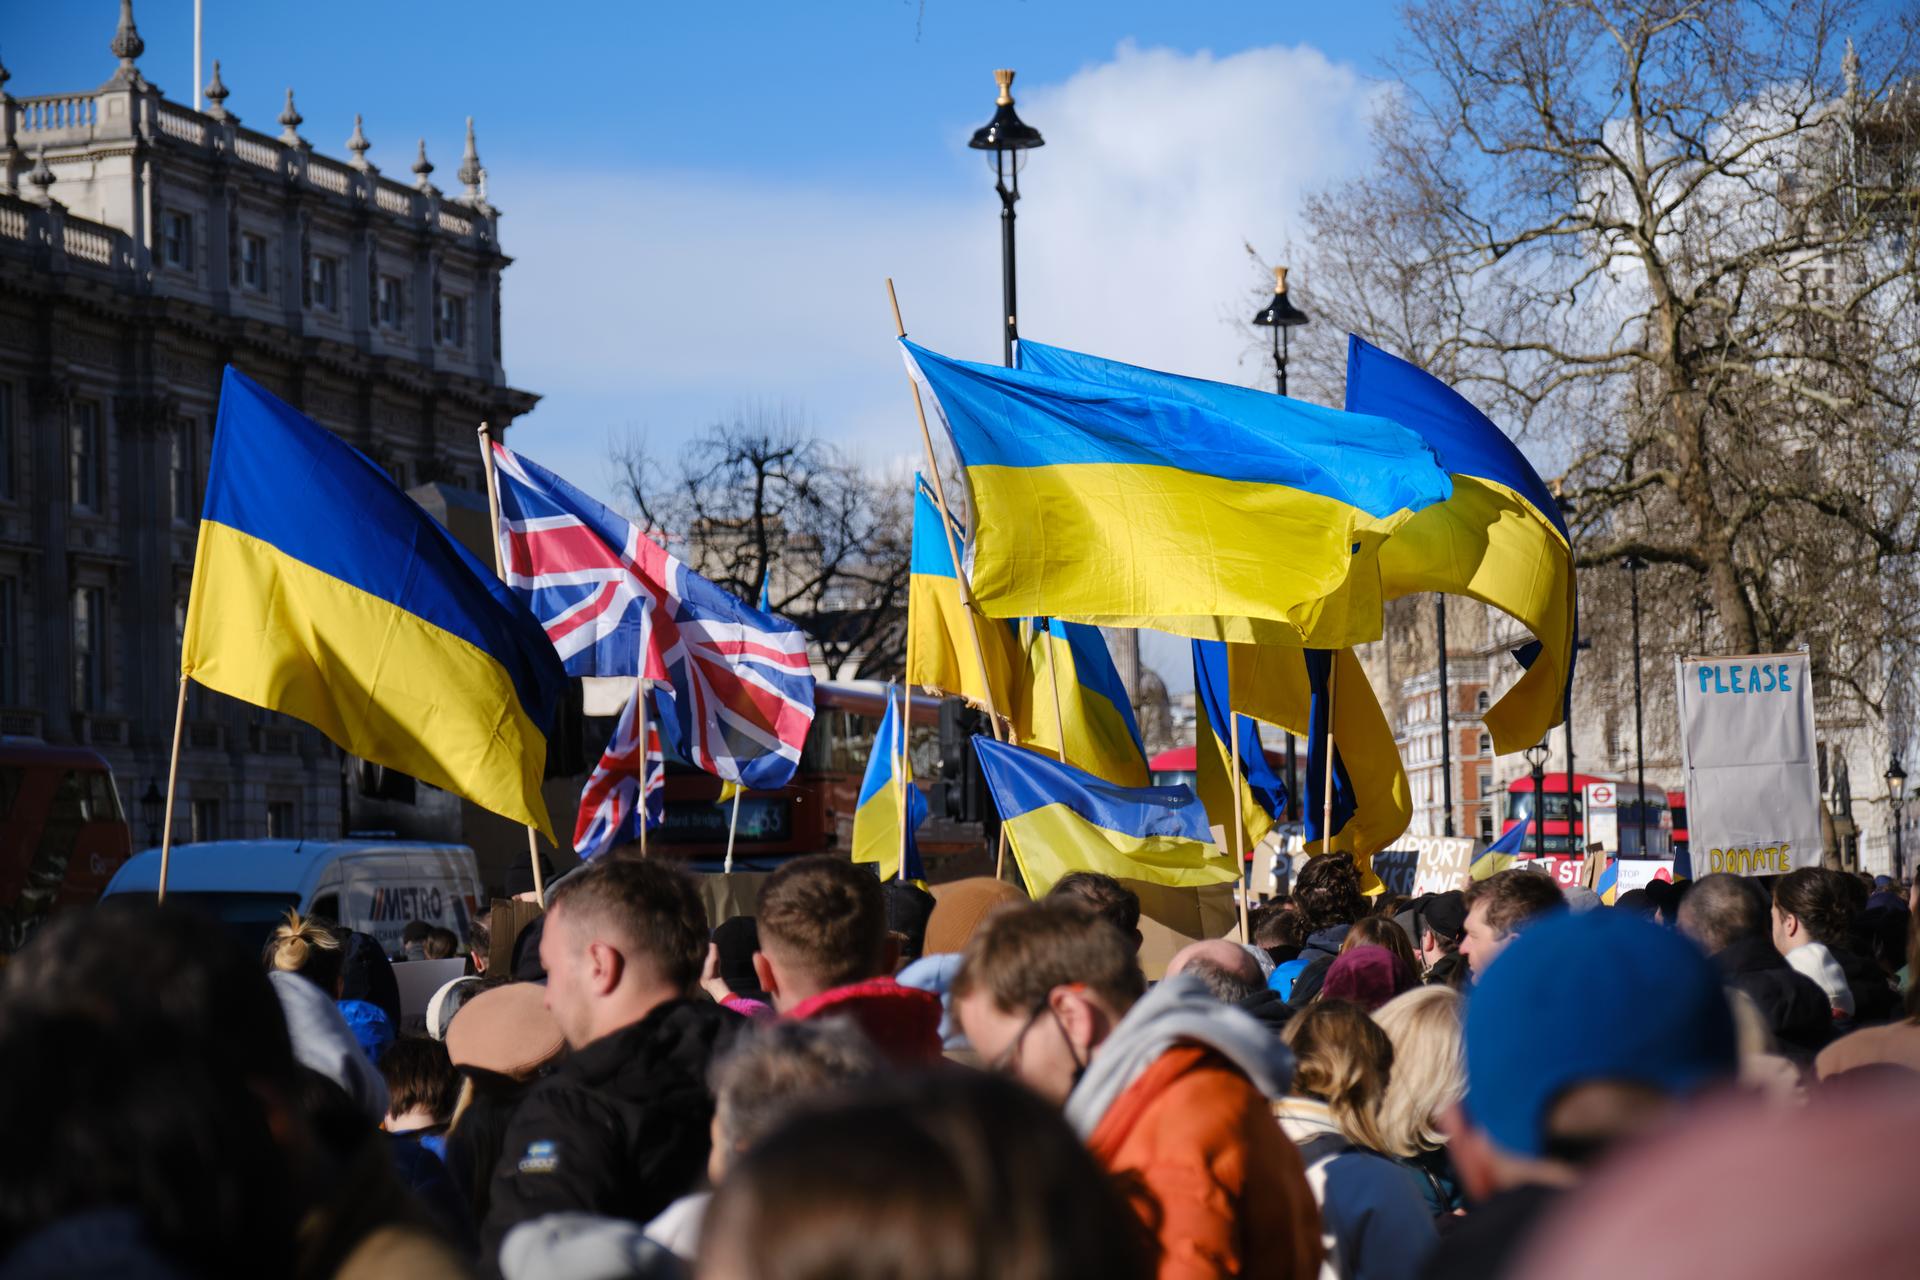 London for Ukraine